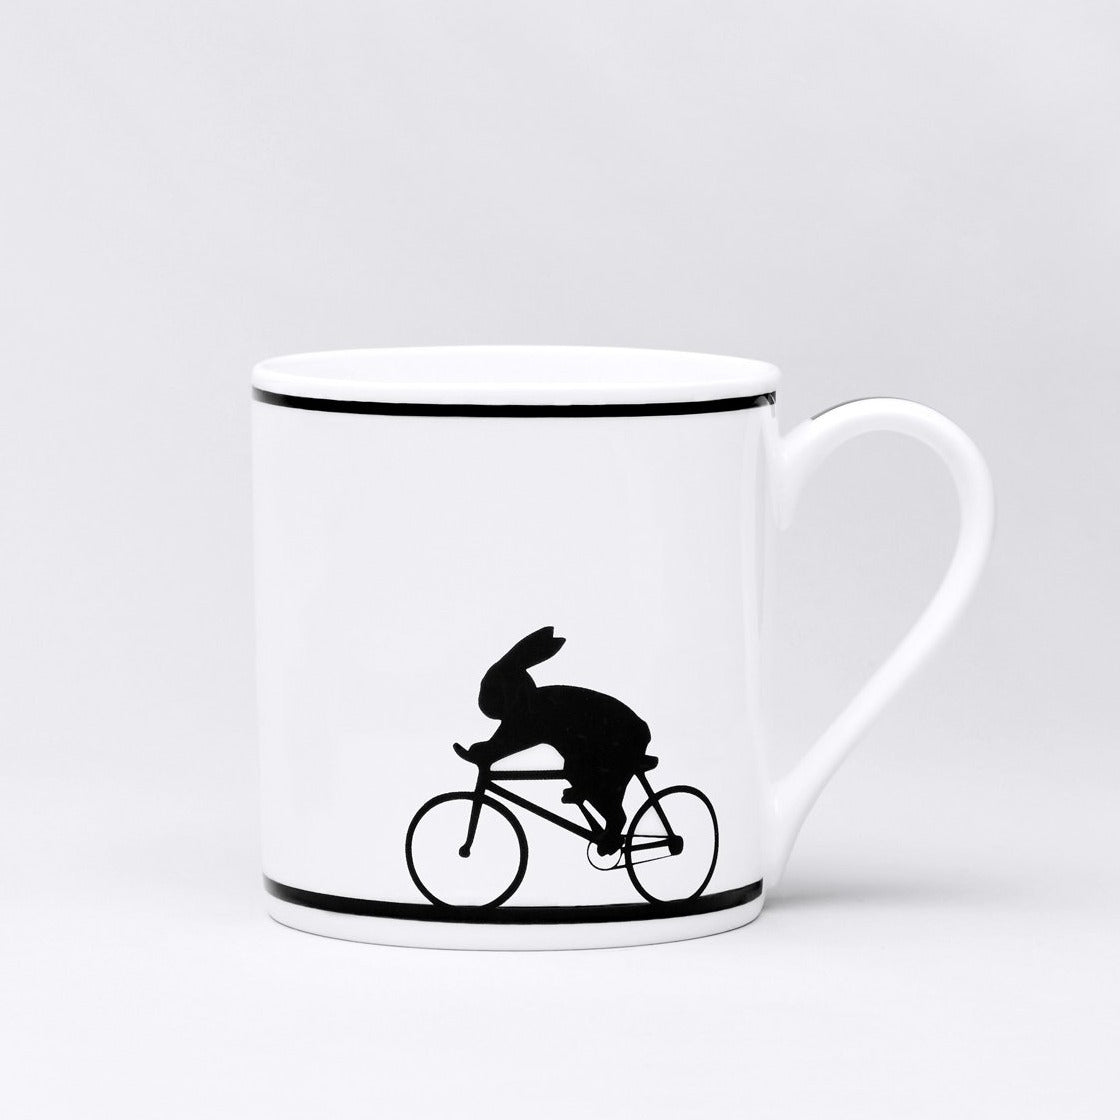 HAM, PORZELLANTASSE, Cycling rabbit, Tea Mug, Gift idea, handpainted